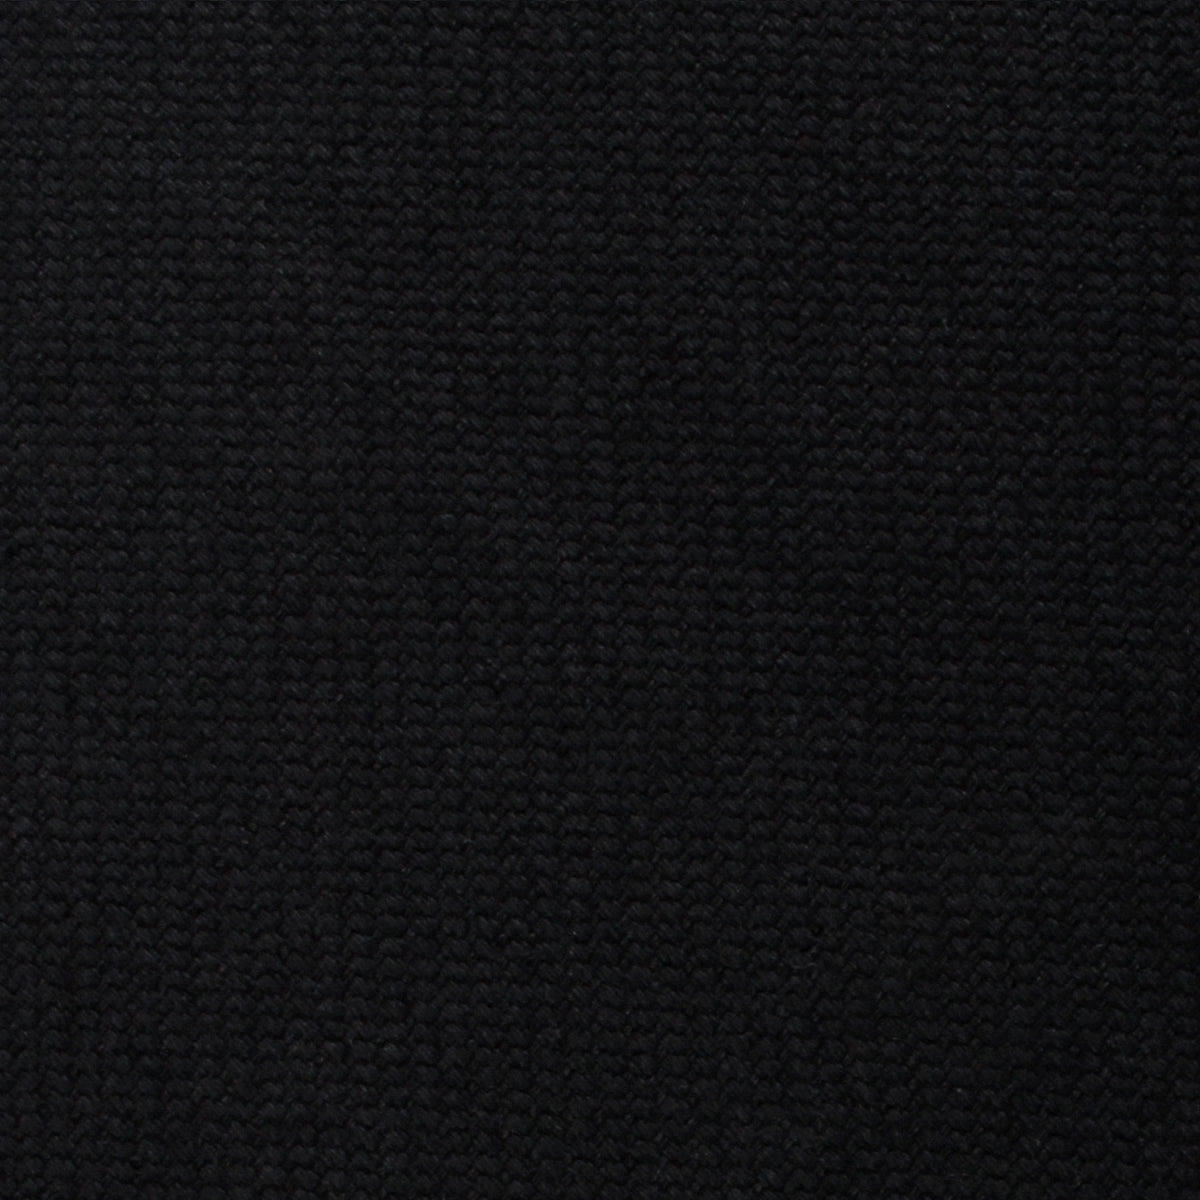 Montego Black Linen Skinny Tie Fabric